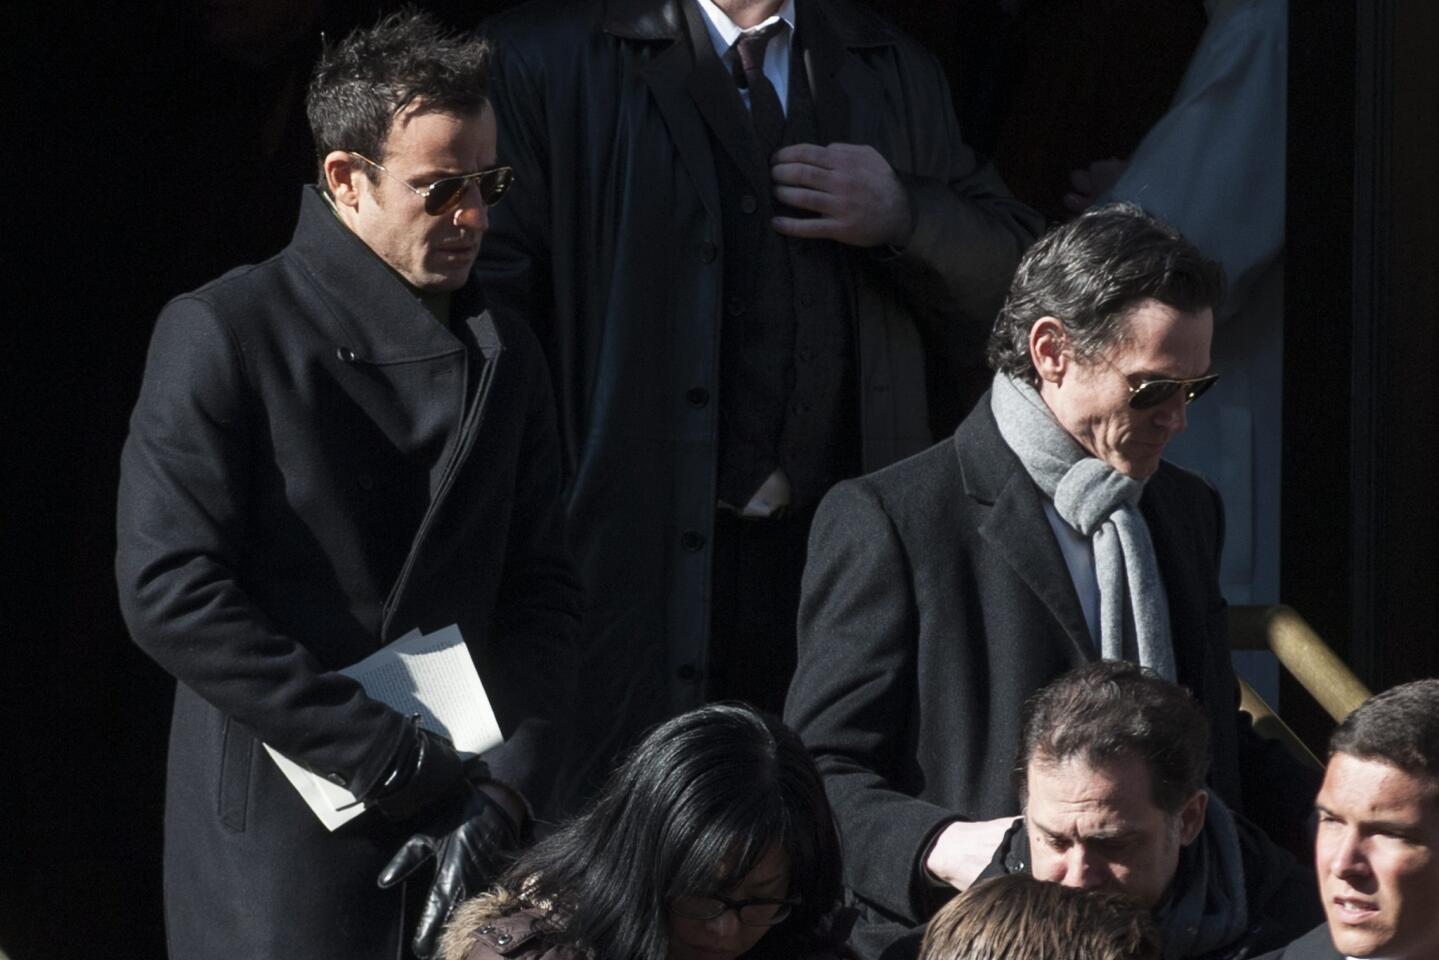 Philip Seymour Hoffman's funeral service